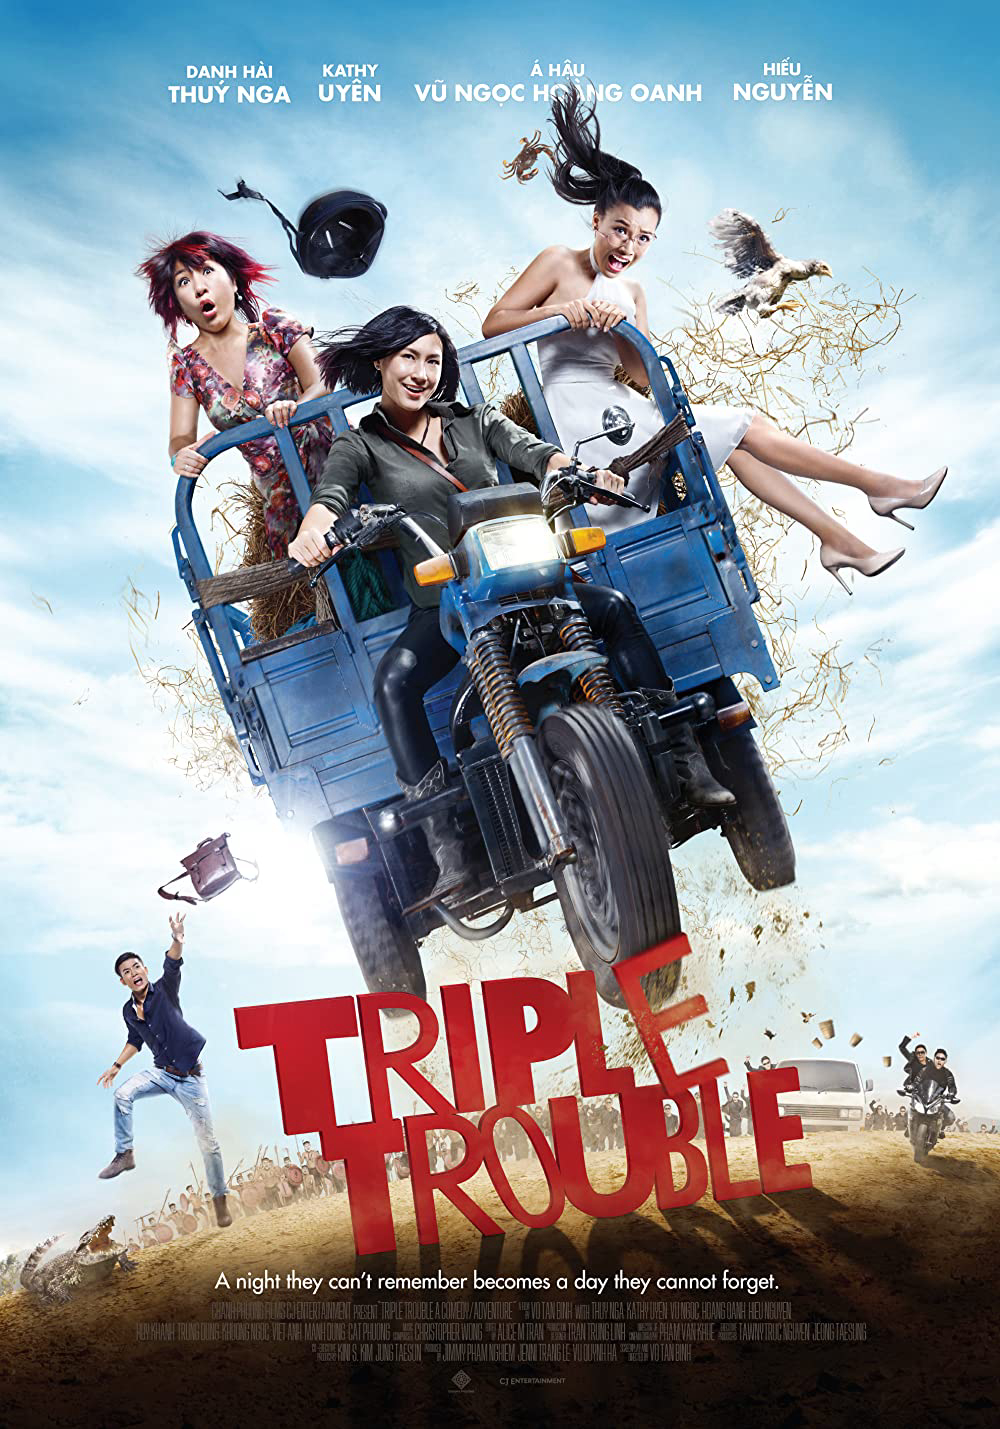 Poster Phim Bộ ba rắc rối (Triple Trouble)